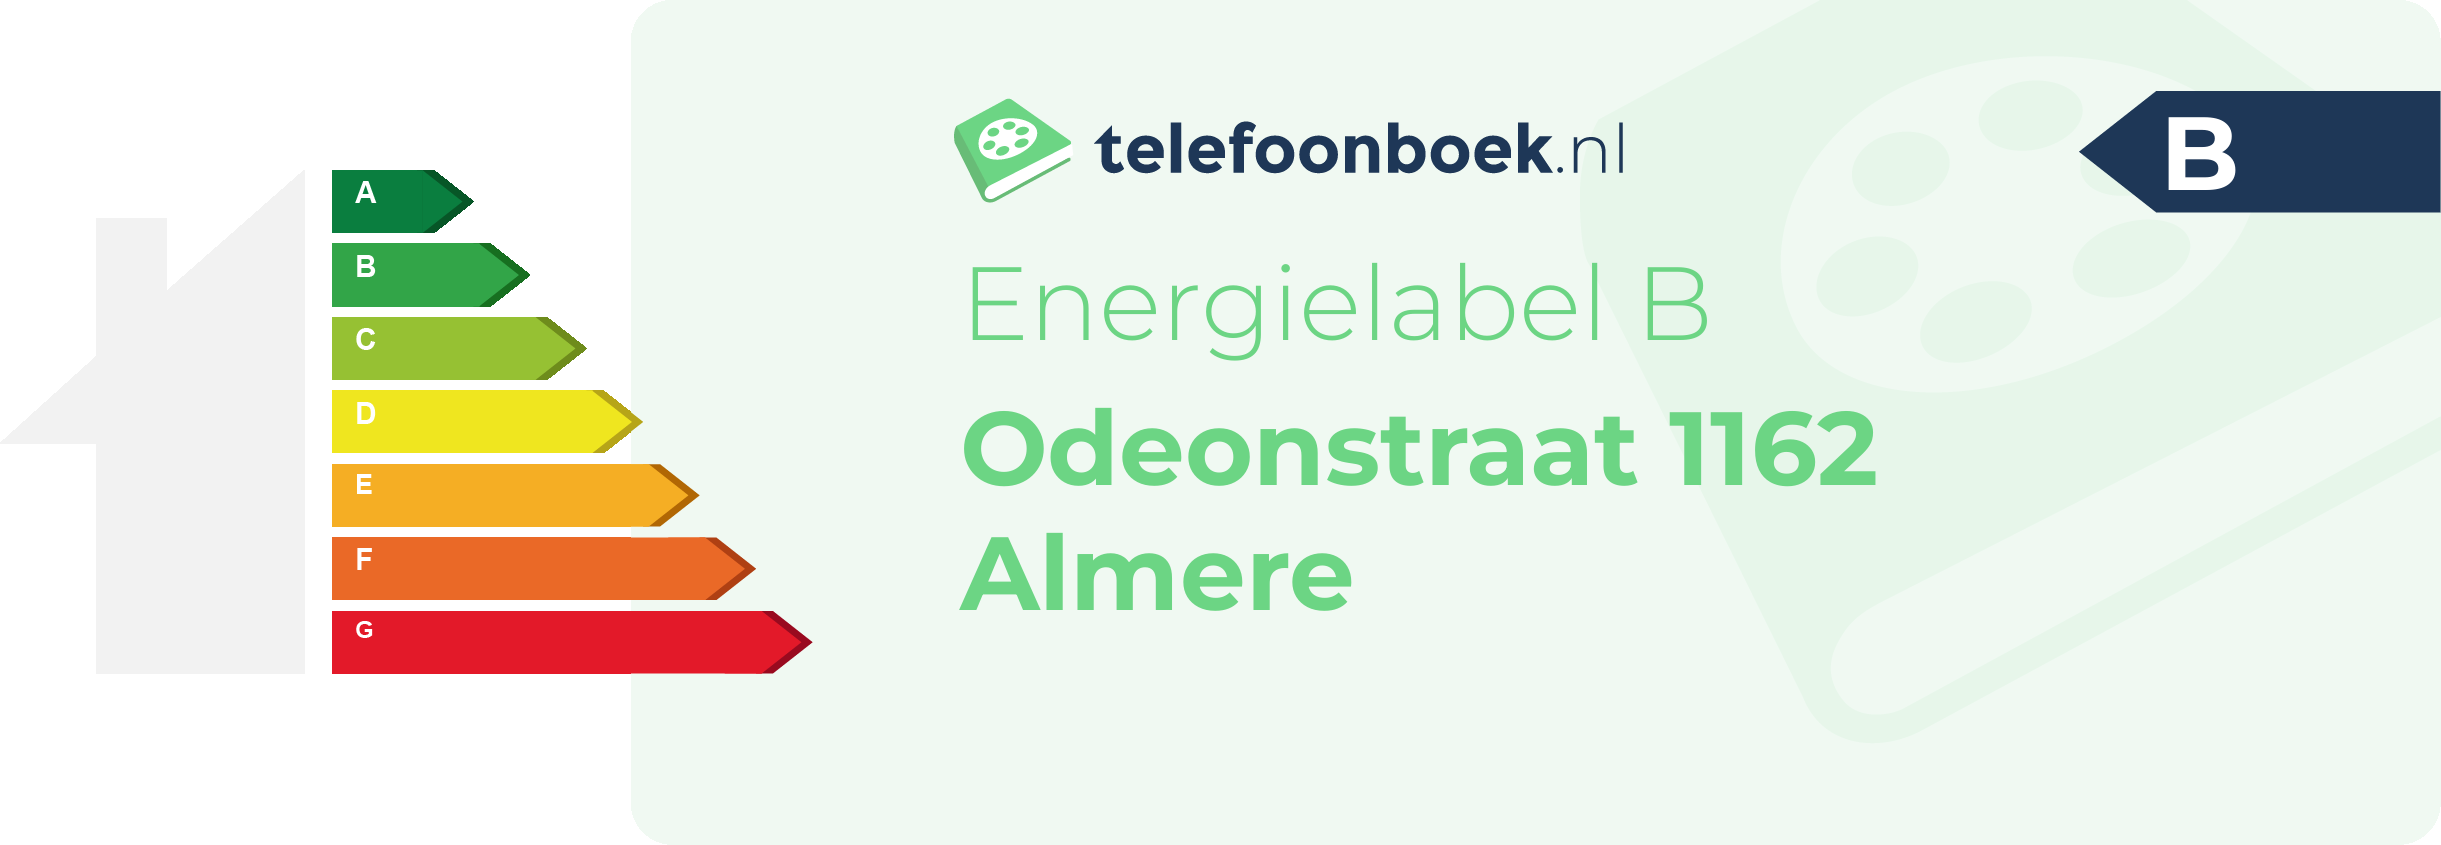 Energielabel Odeonstraat 1162 Almere